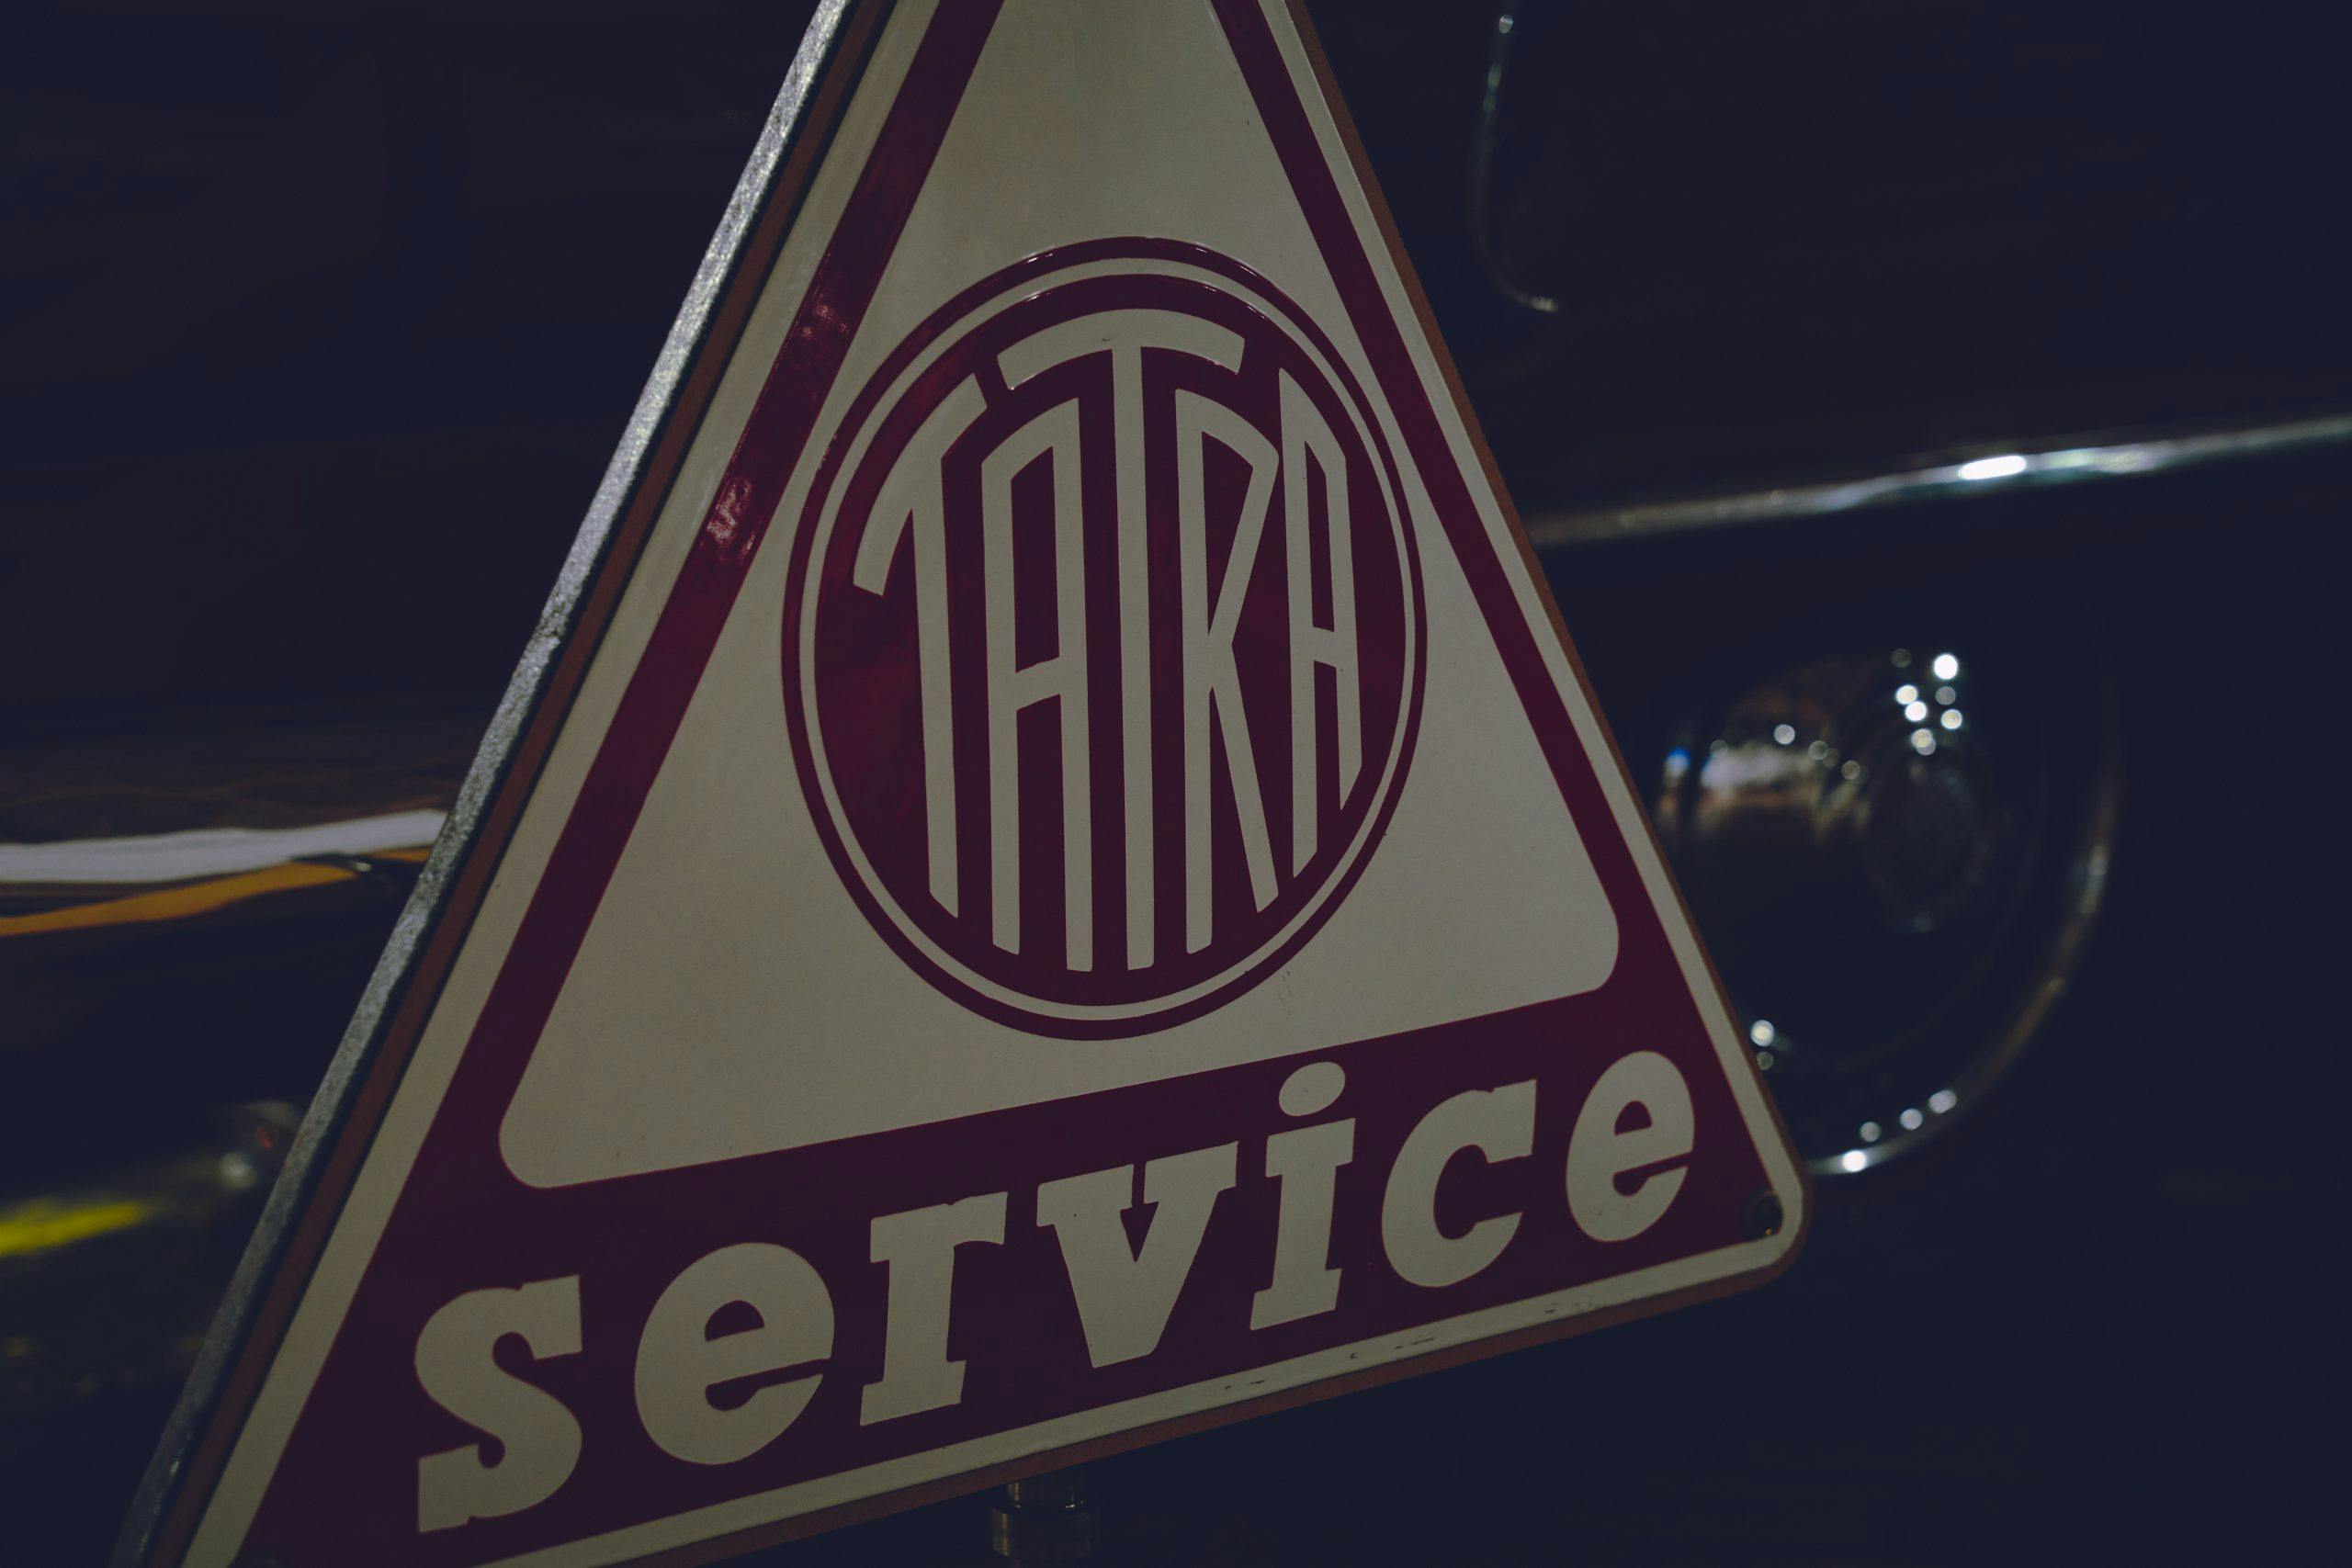 Nashville vintage car museum tatra service